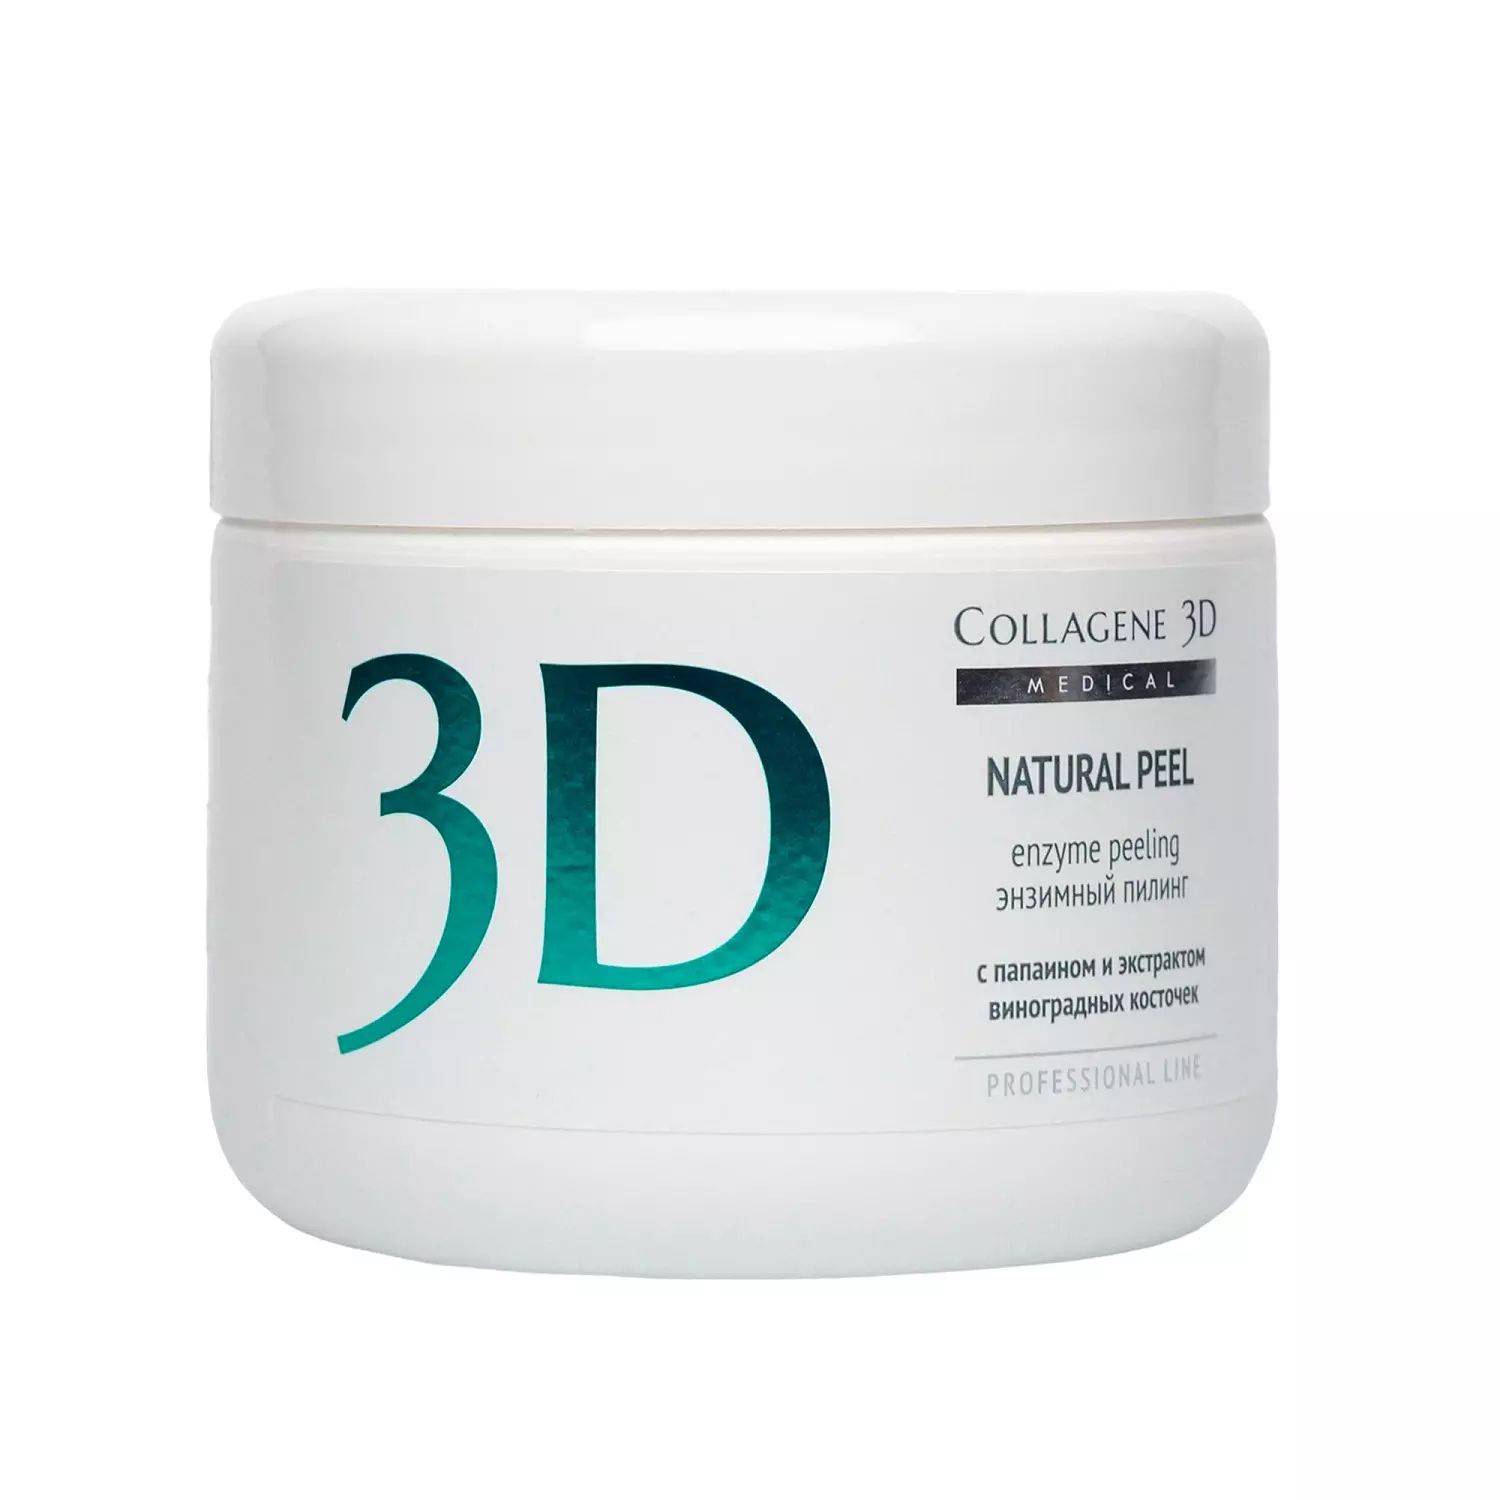 Пилинг для лица Medical Collagene 3D Enzyme Peeling with papain 150 г medical collagene 3d пилинг с коллагеназой natural peel 150 мл